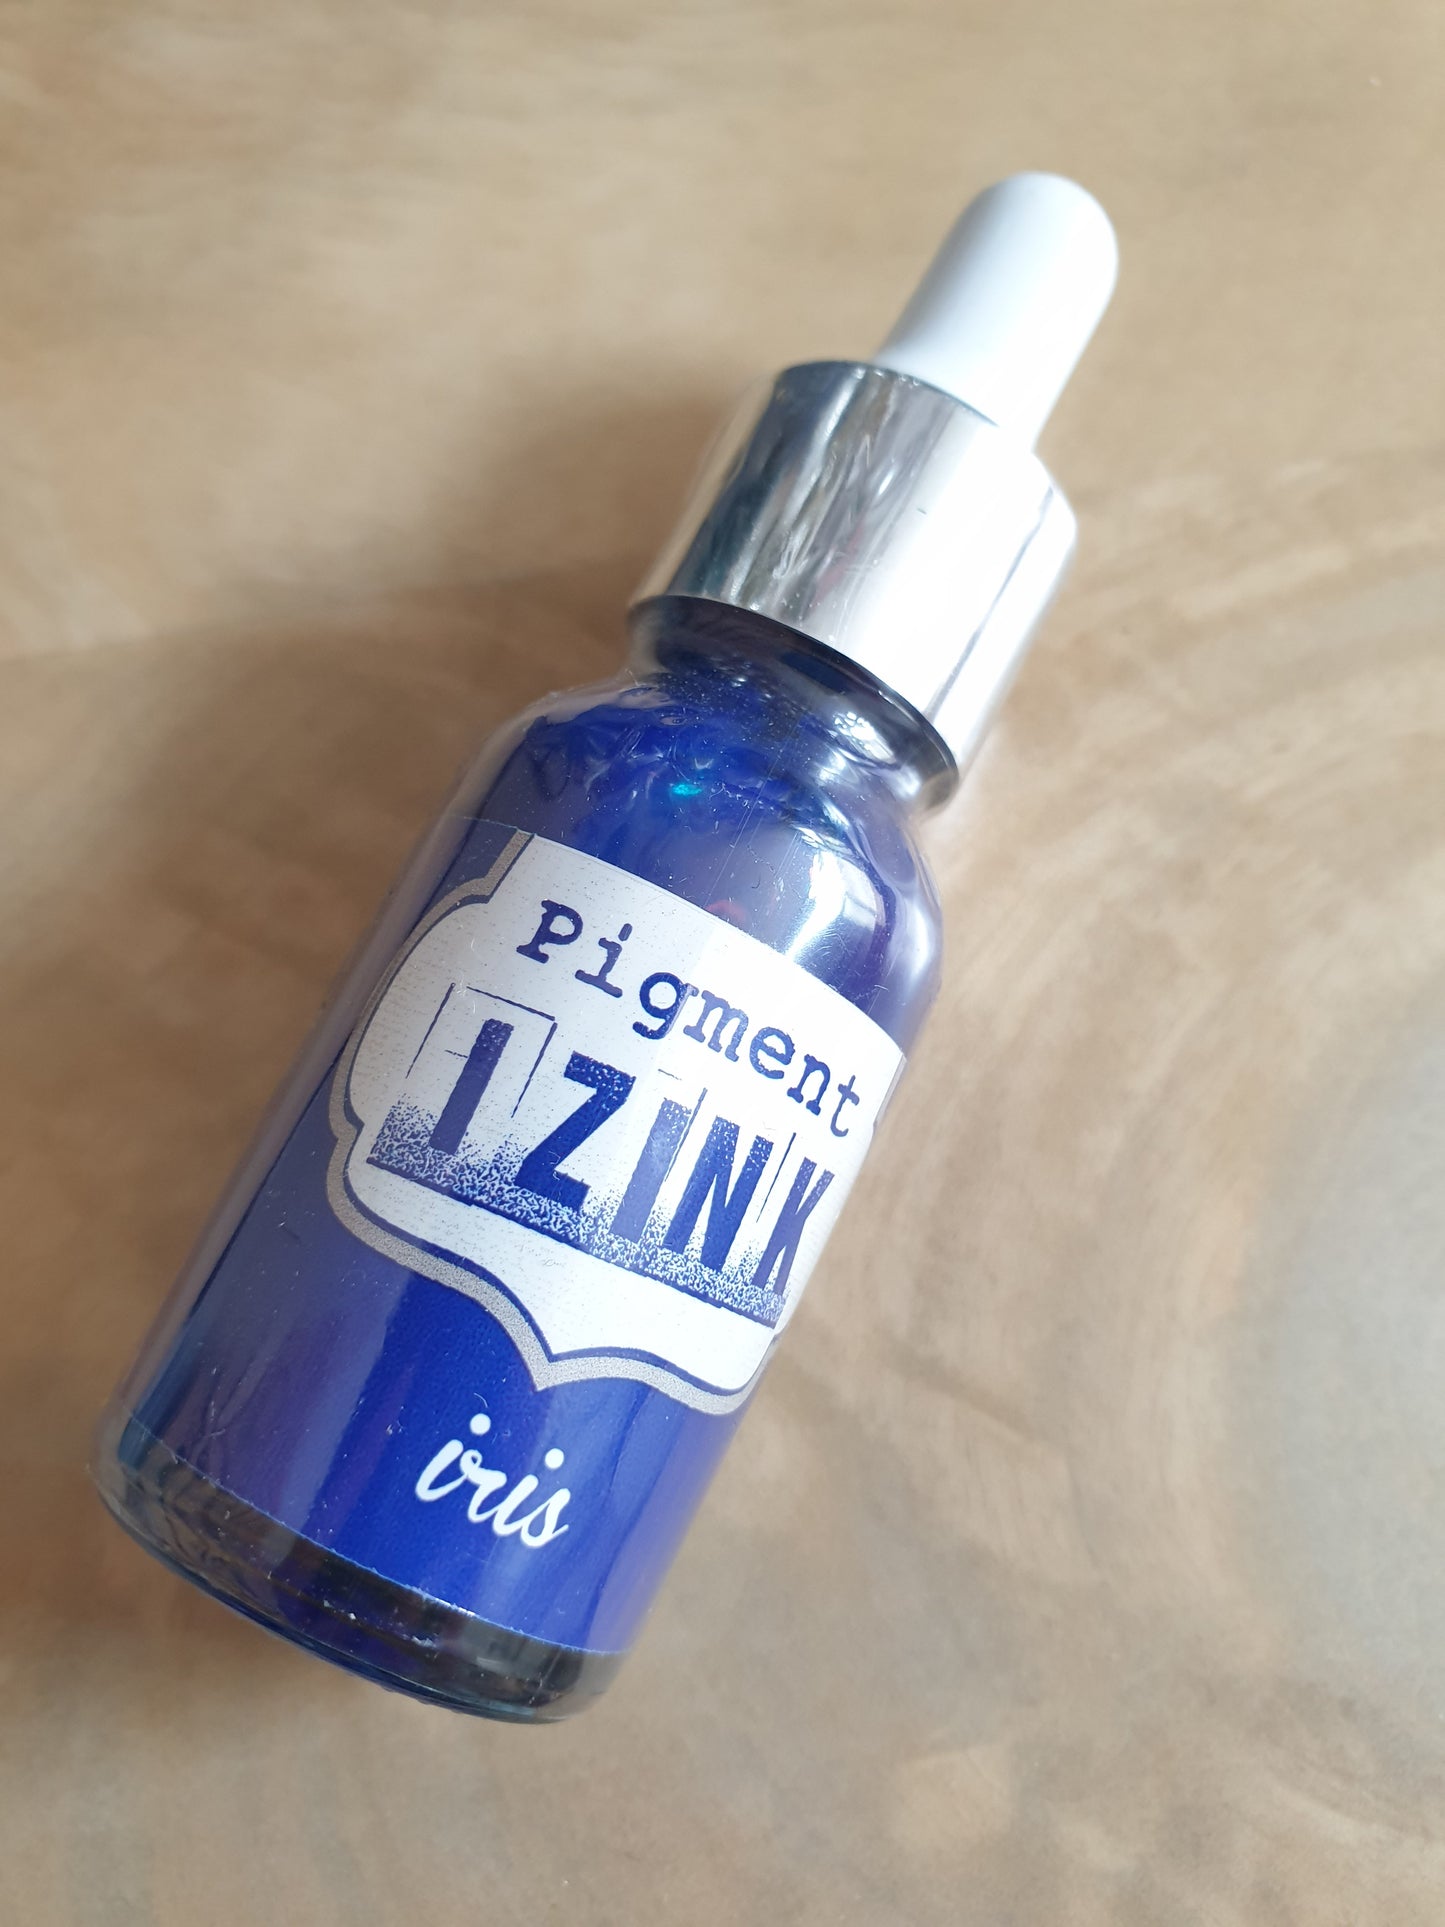 Encre pigment IZINK à forte pigmentation Aladine fabrication française